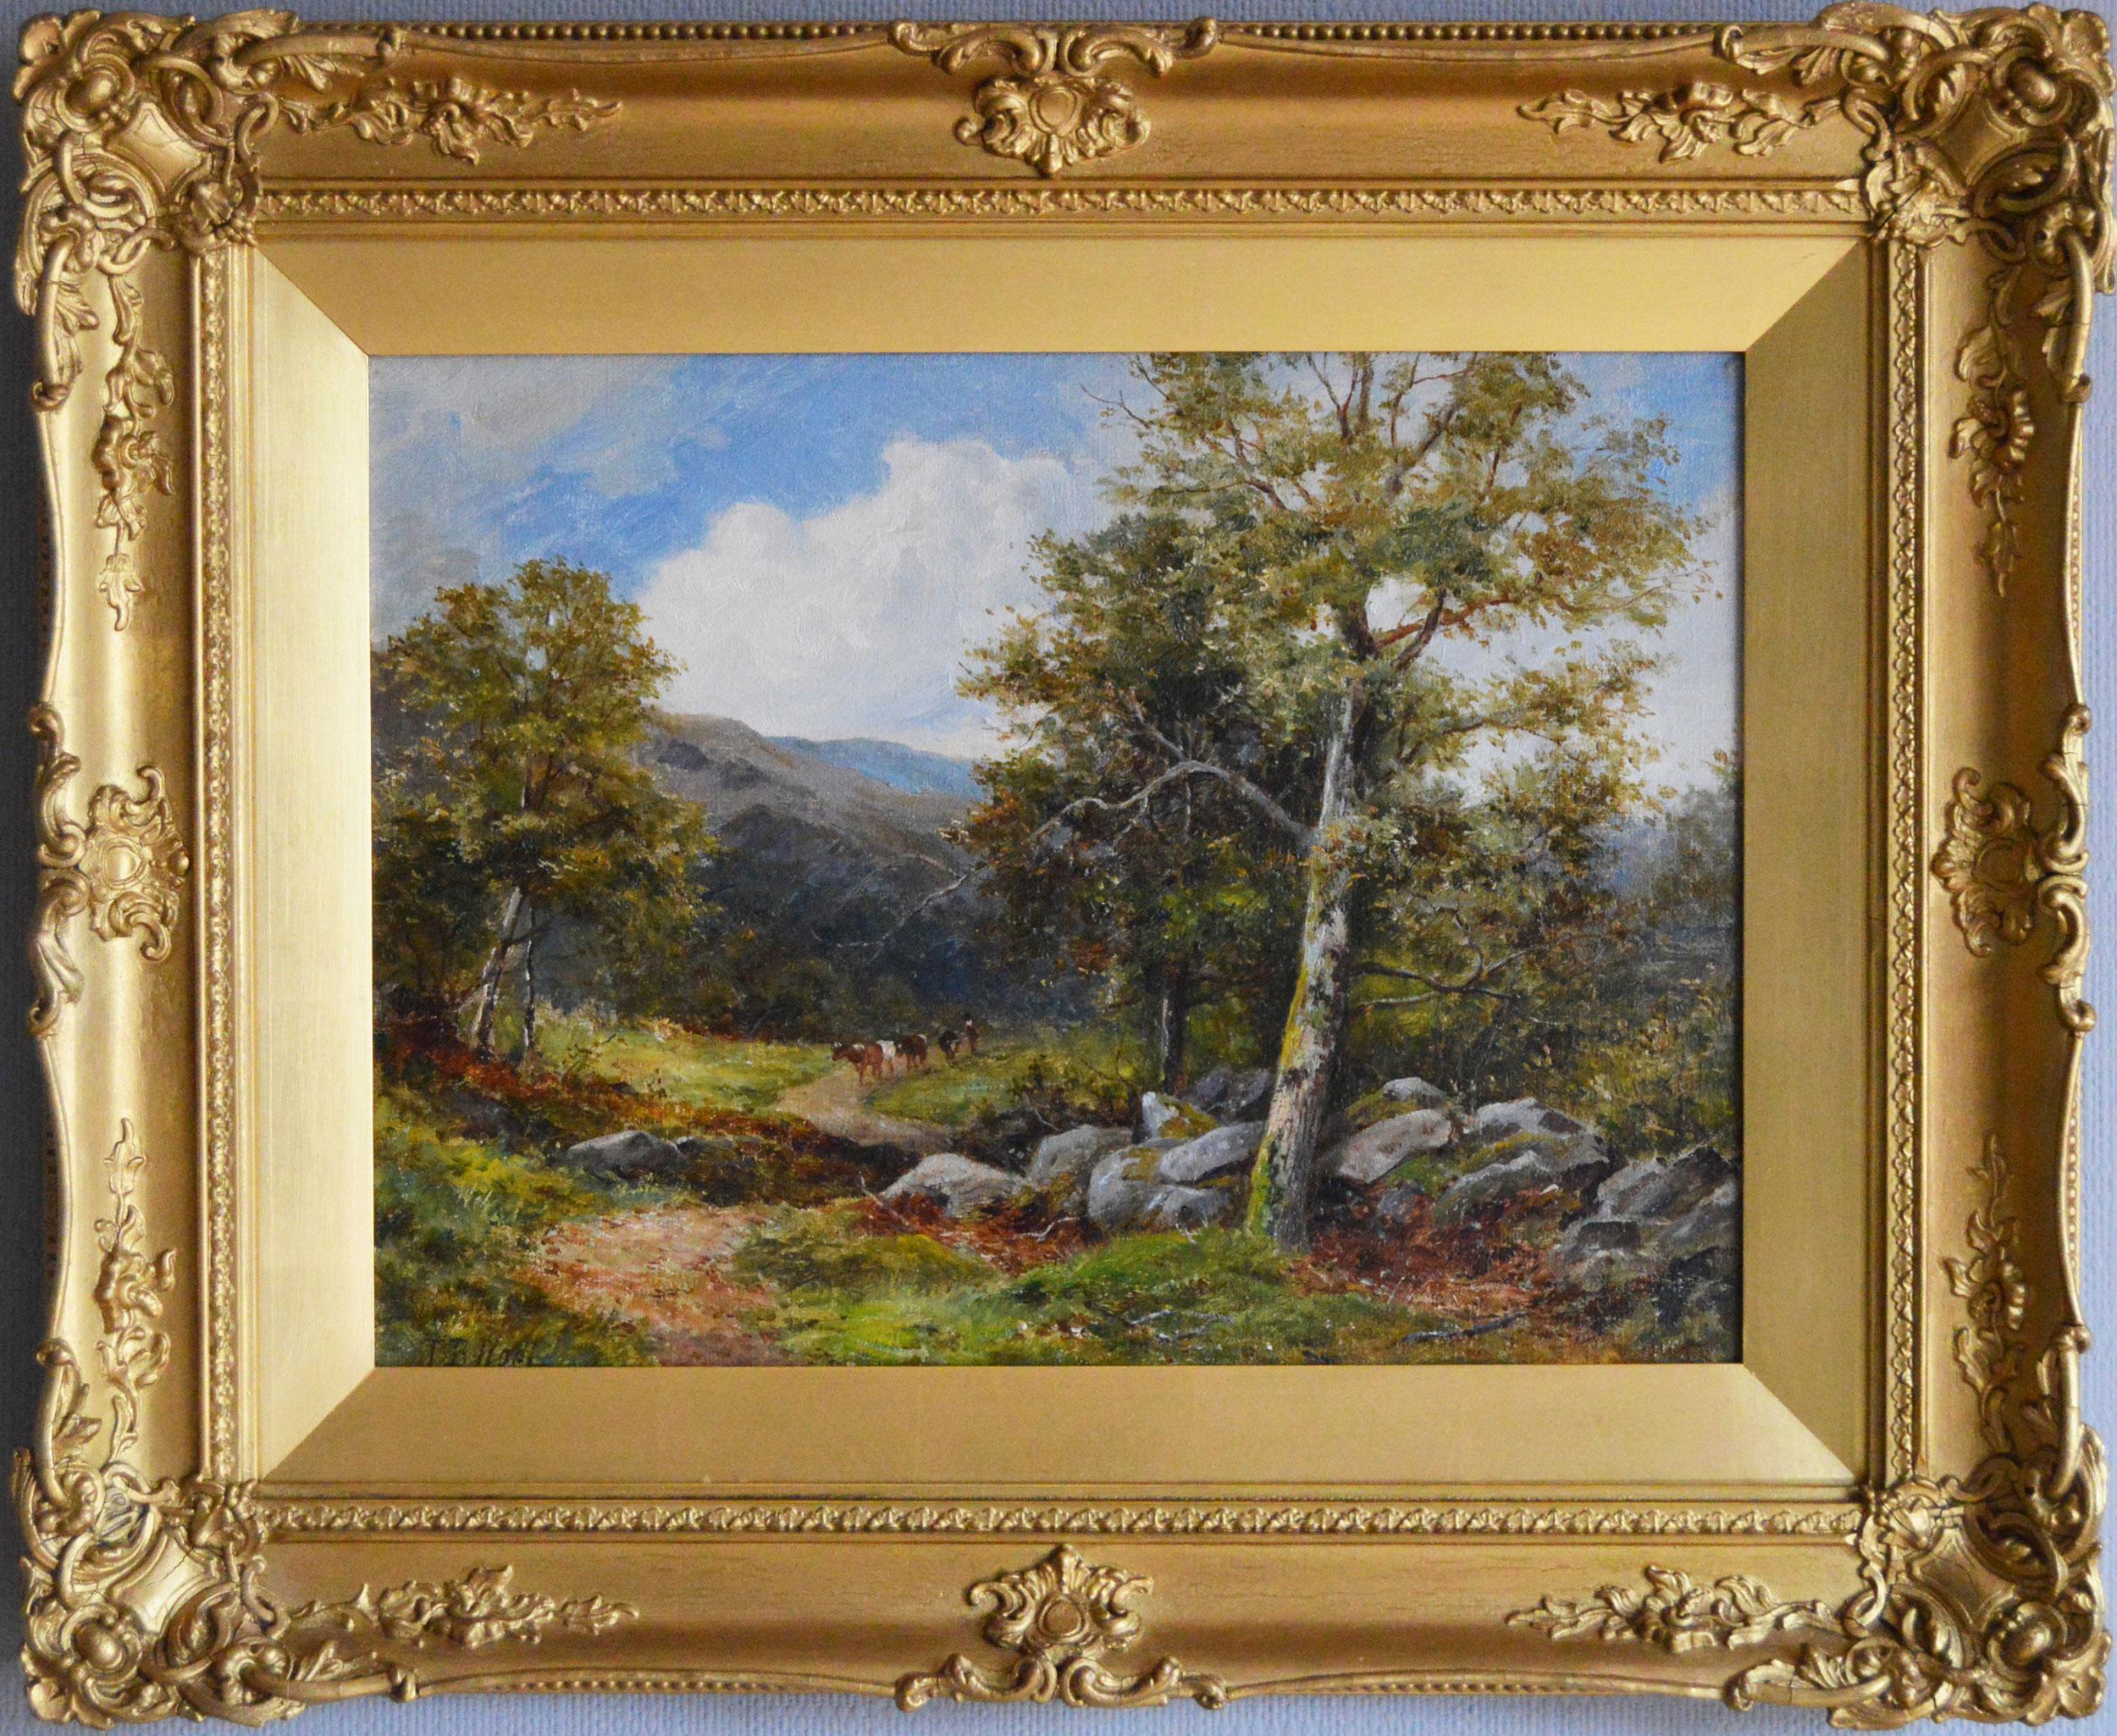 Pair of 19th century landscape oil paintings of the River Avon & Berwyn Valley - Black Landscape Painting by John Bates Noel